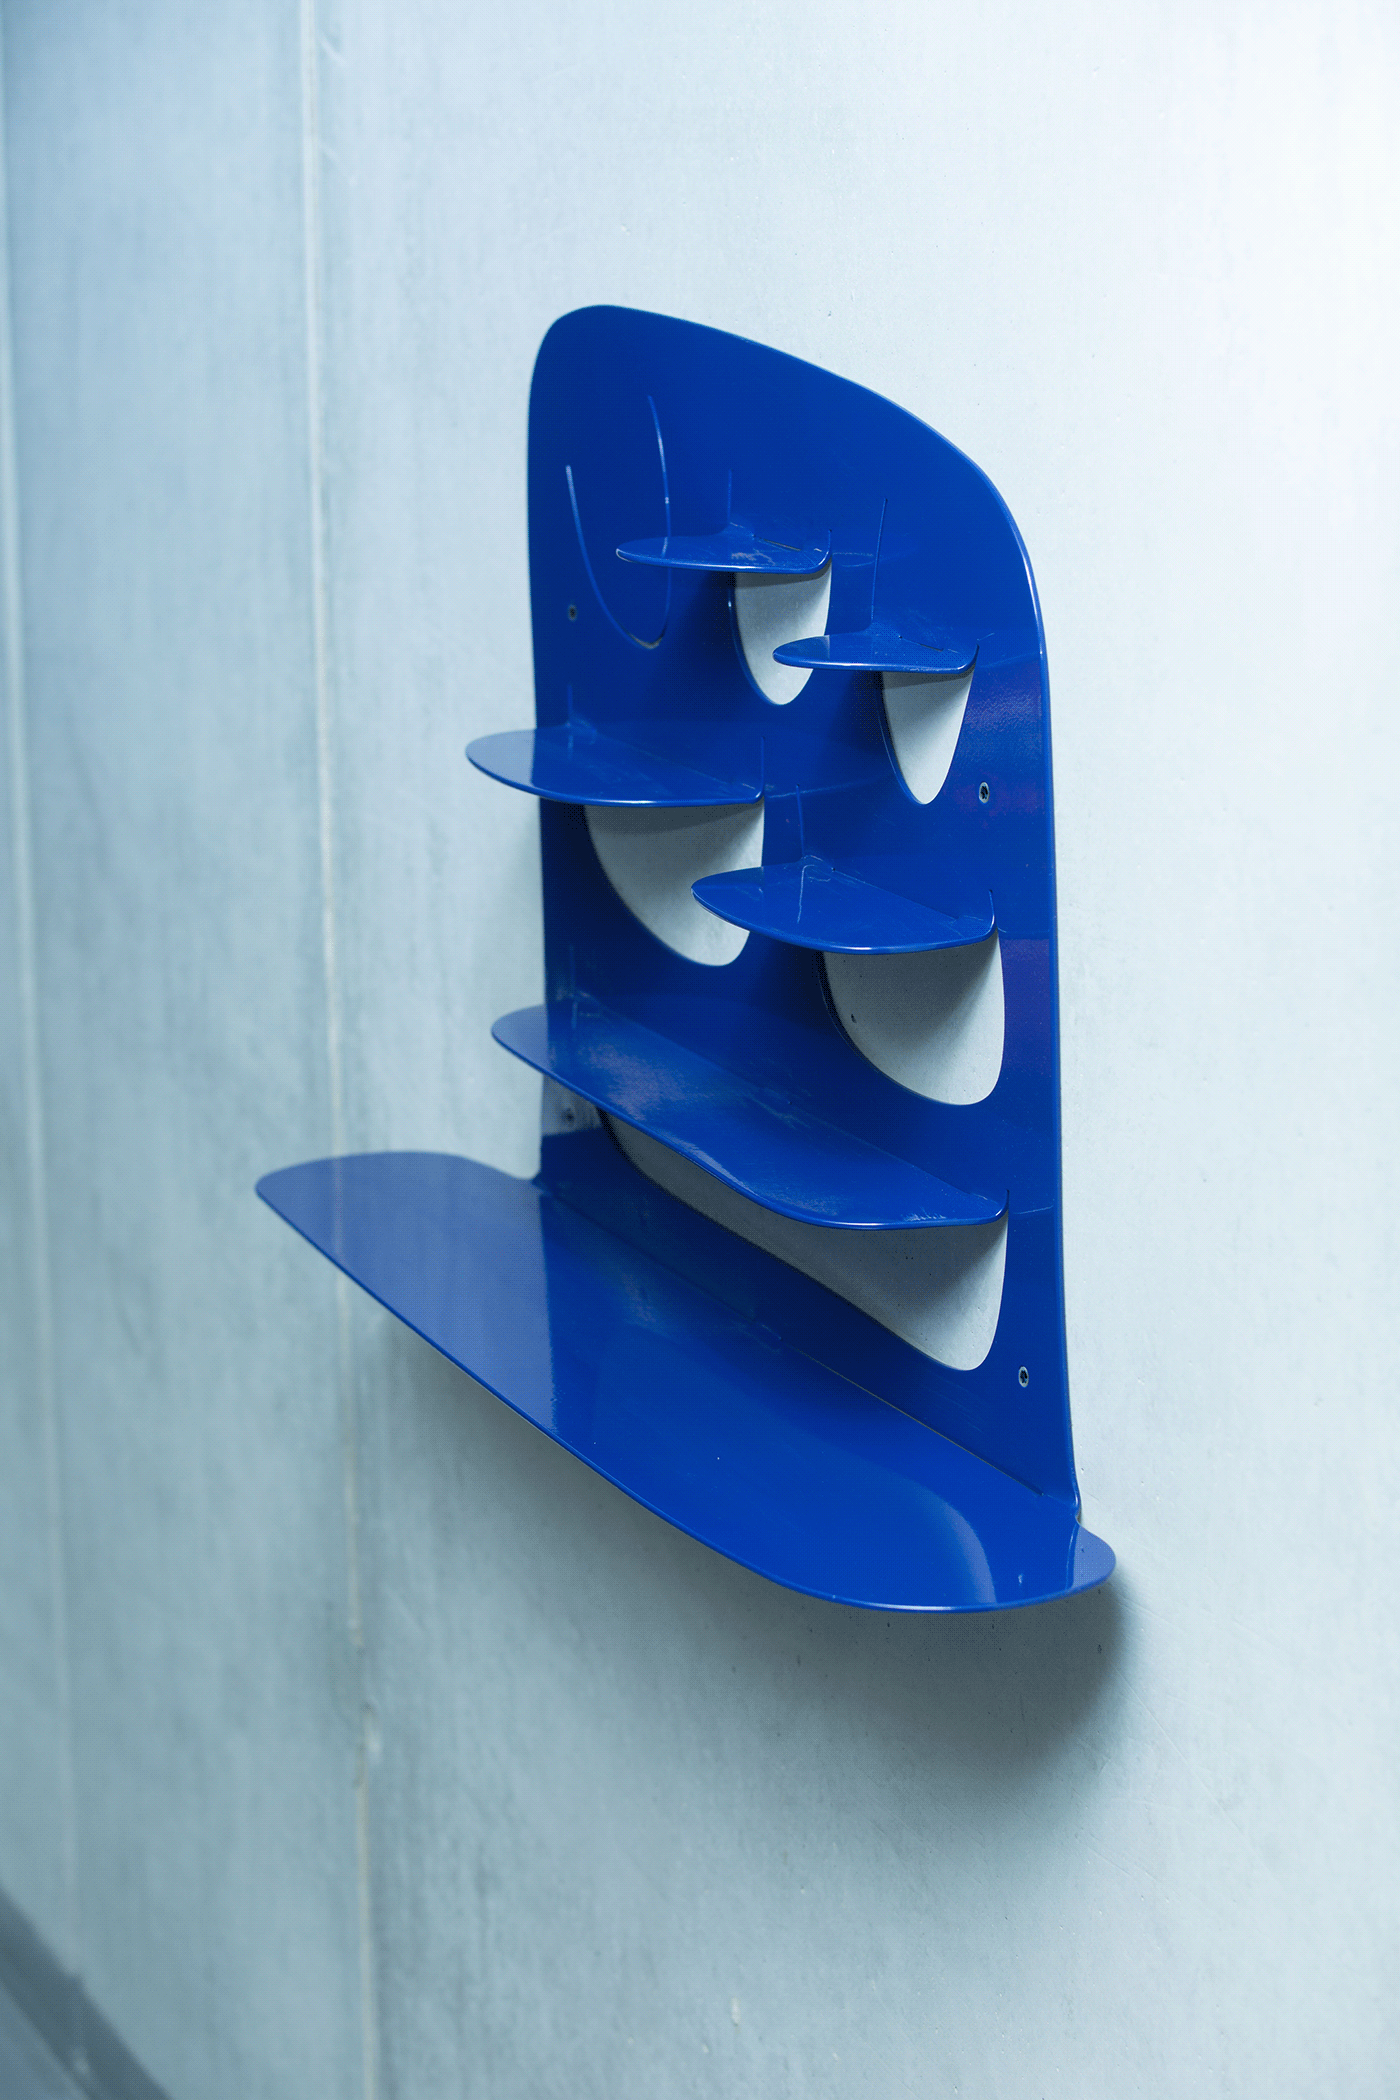 art bend bending Character industrial design  metal Shelf shelf design Shelve storage